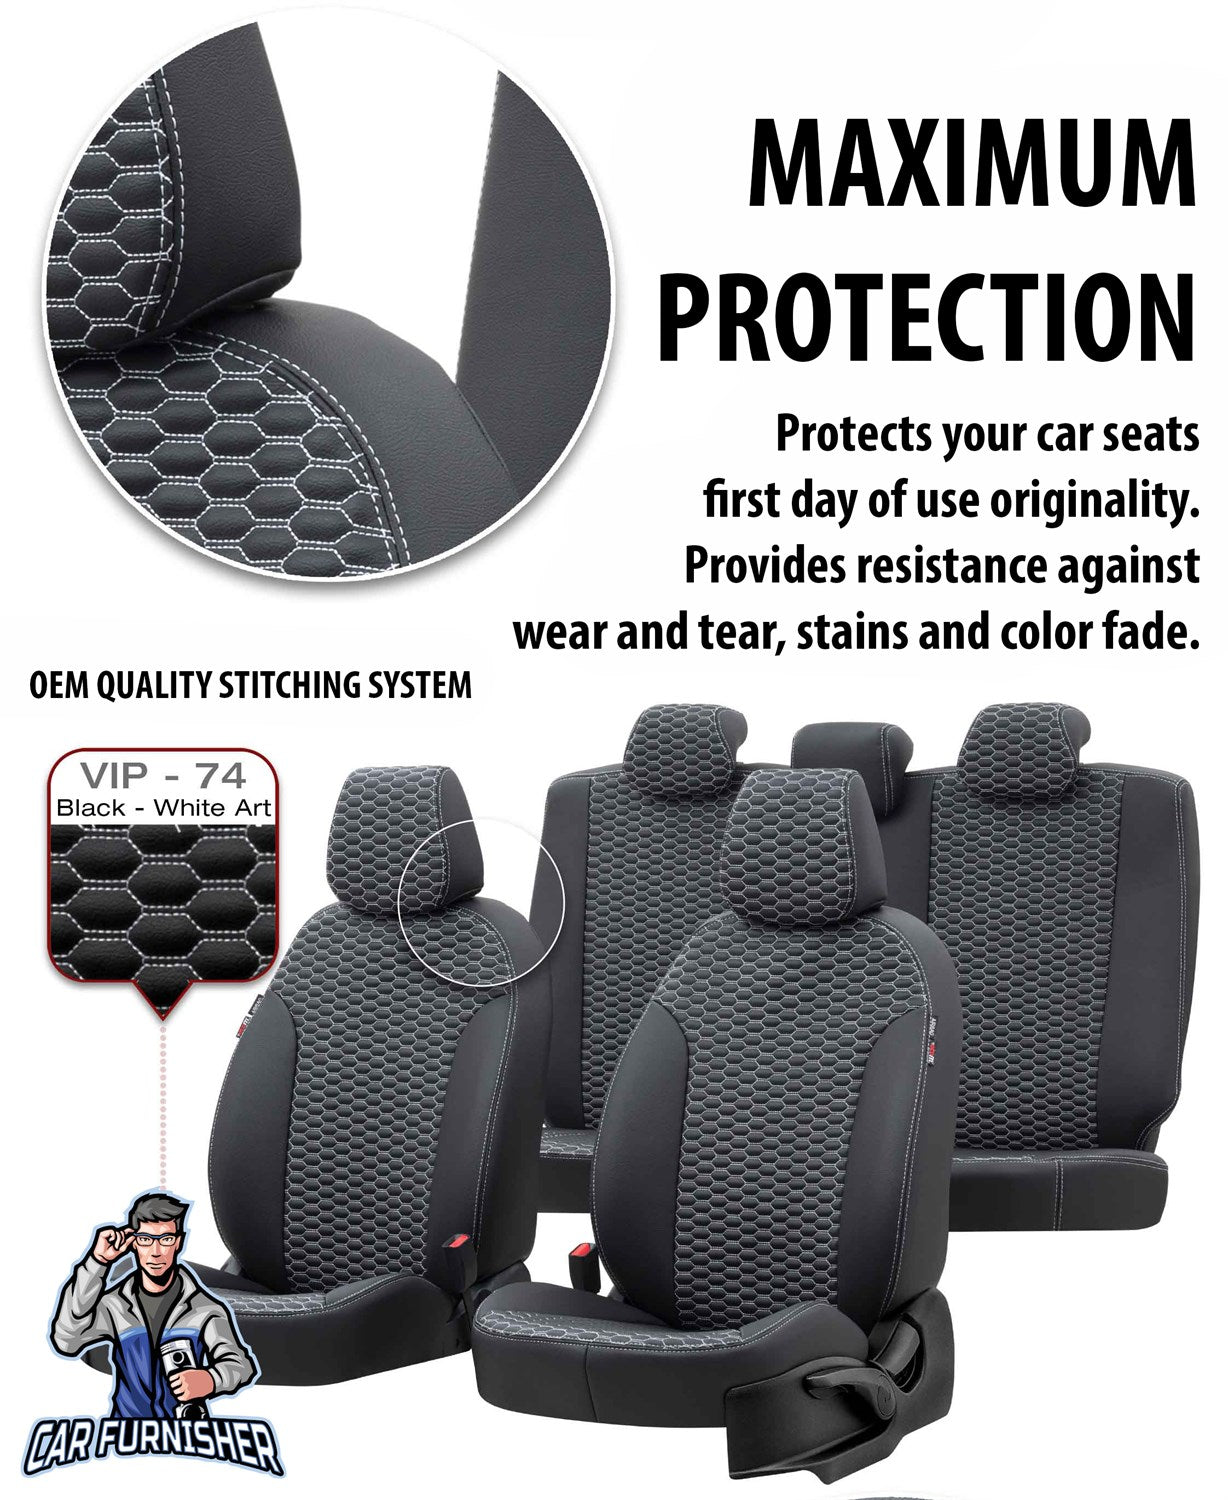 Dacia Sandero Seat Covers Tokyo Leather Design Black Leather